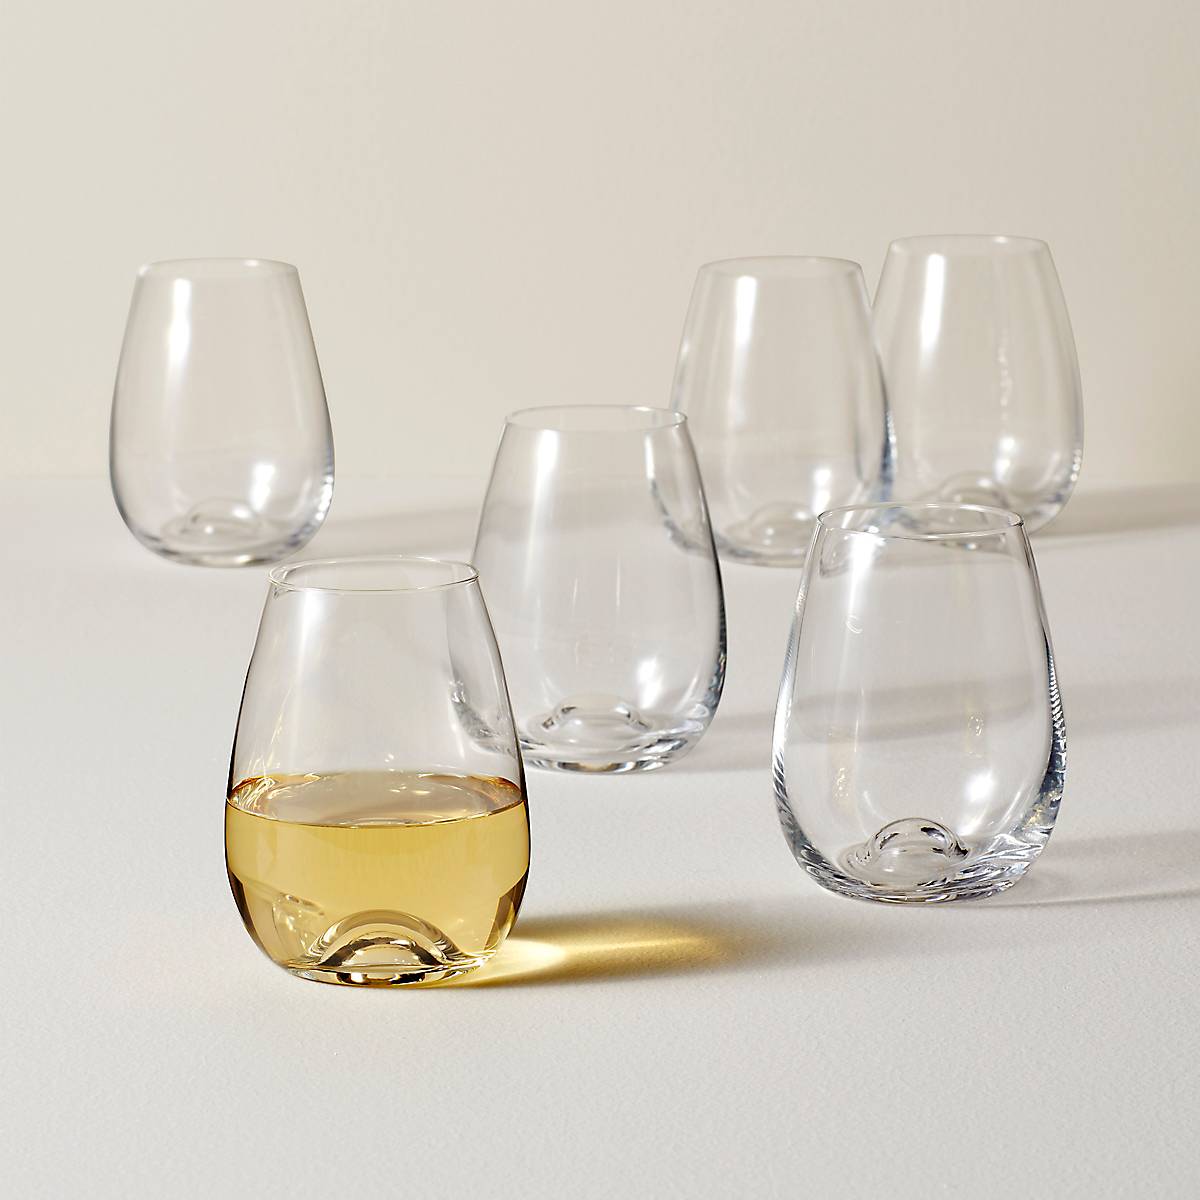 Tuscany Classics Stemless Glass Set, Buy 4 Get 6